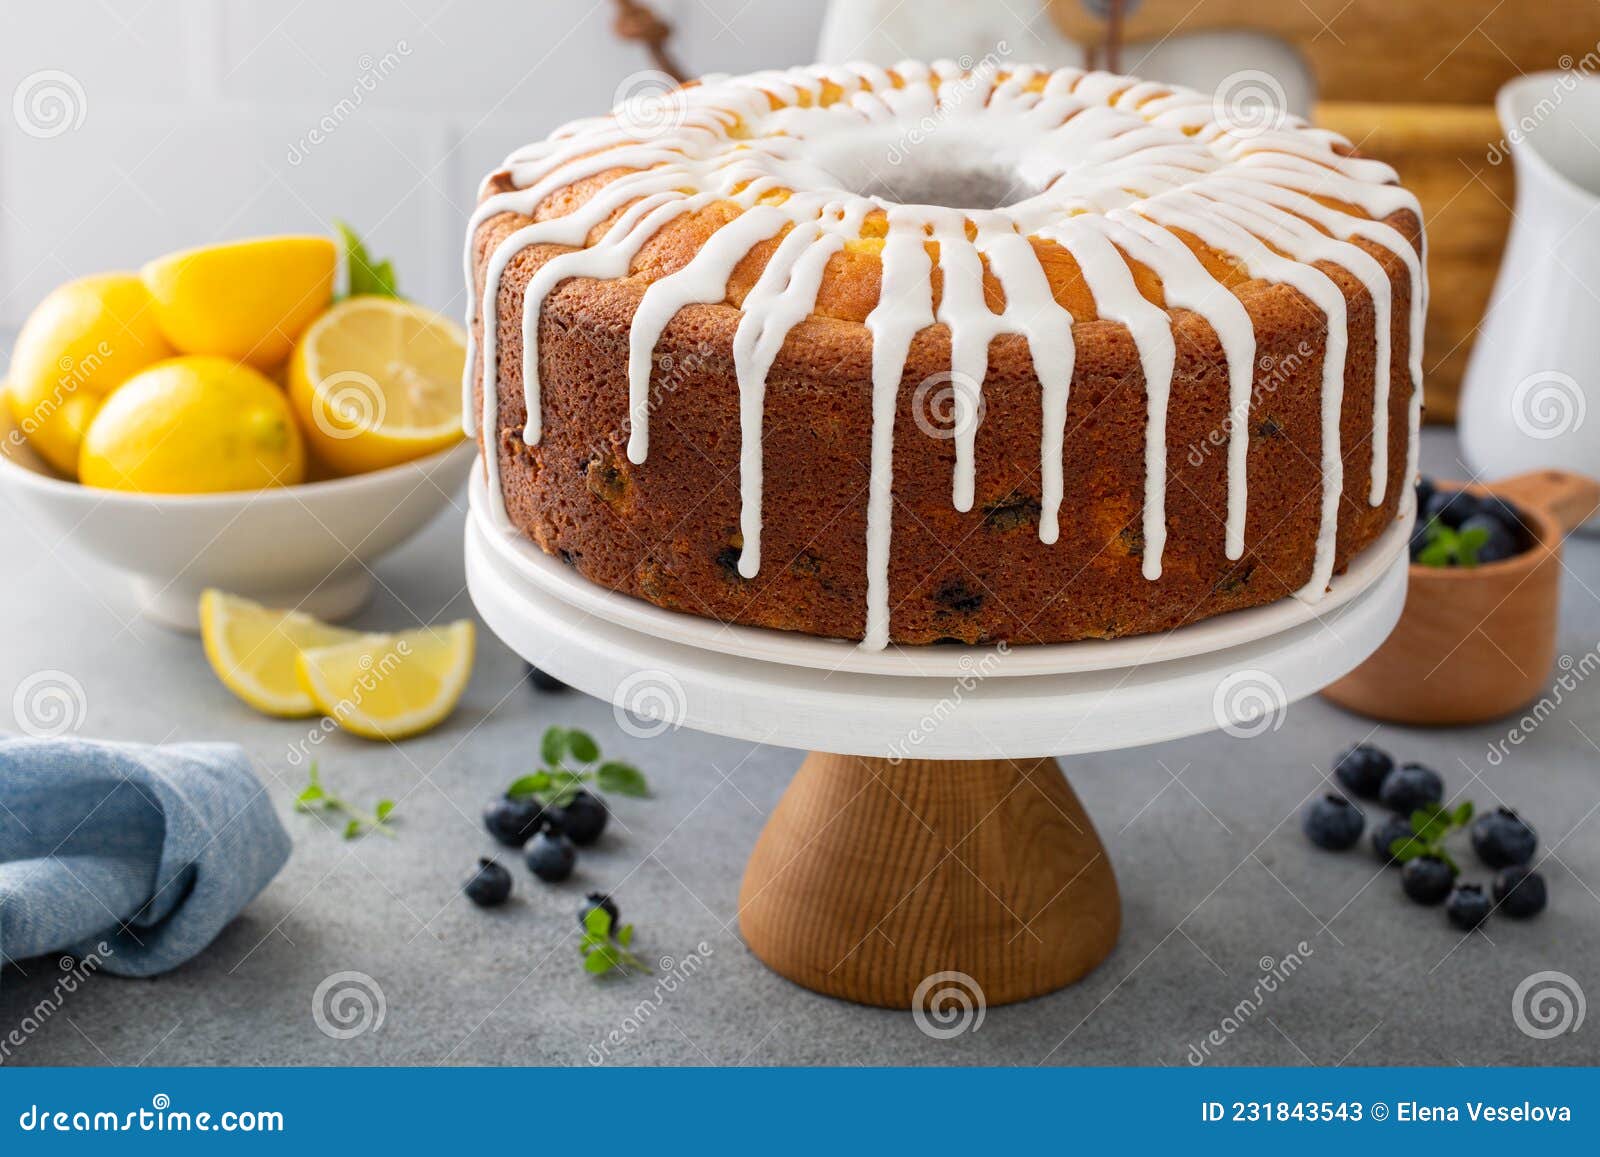 lemon blueberry pound cake with powder sugar glaze